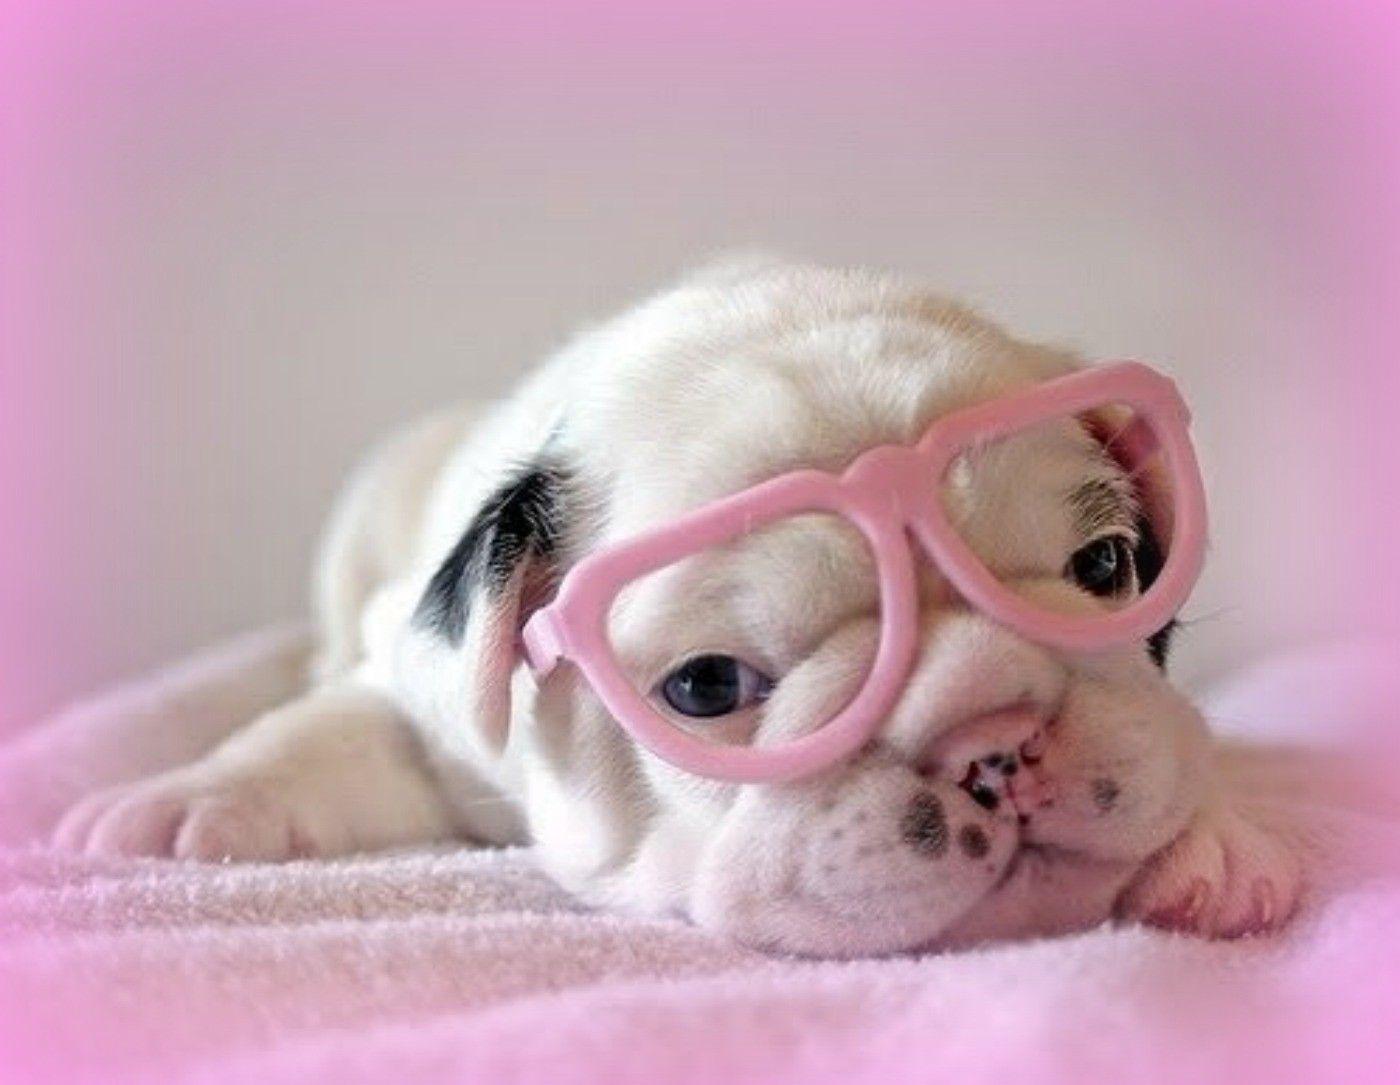 cute pink puppies wallpaper